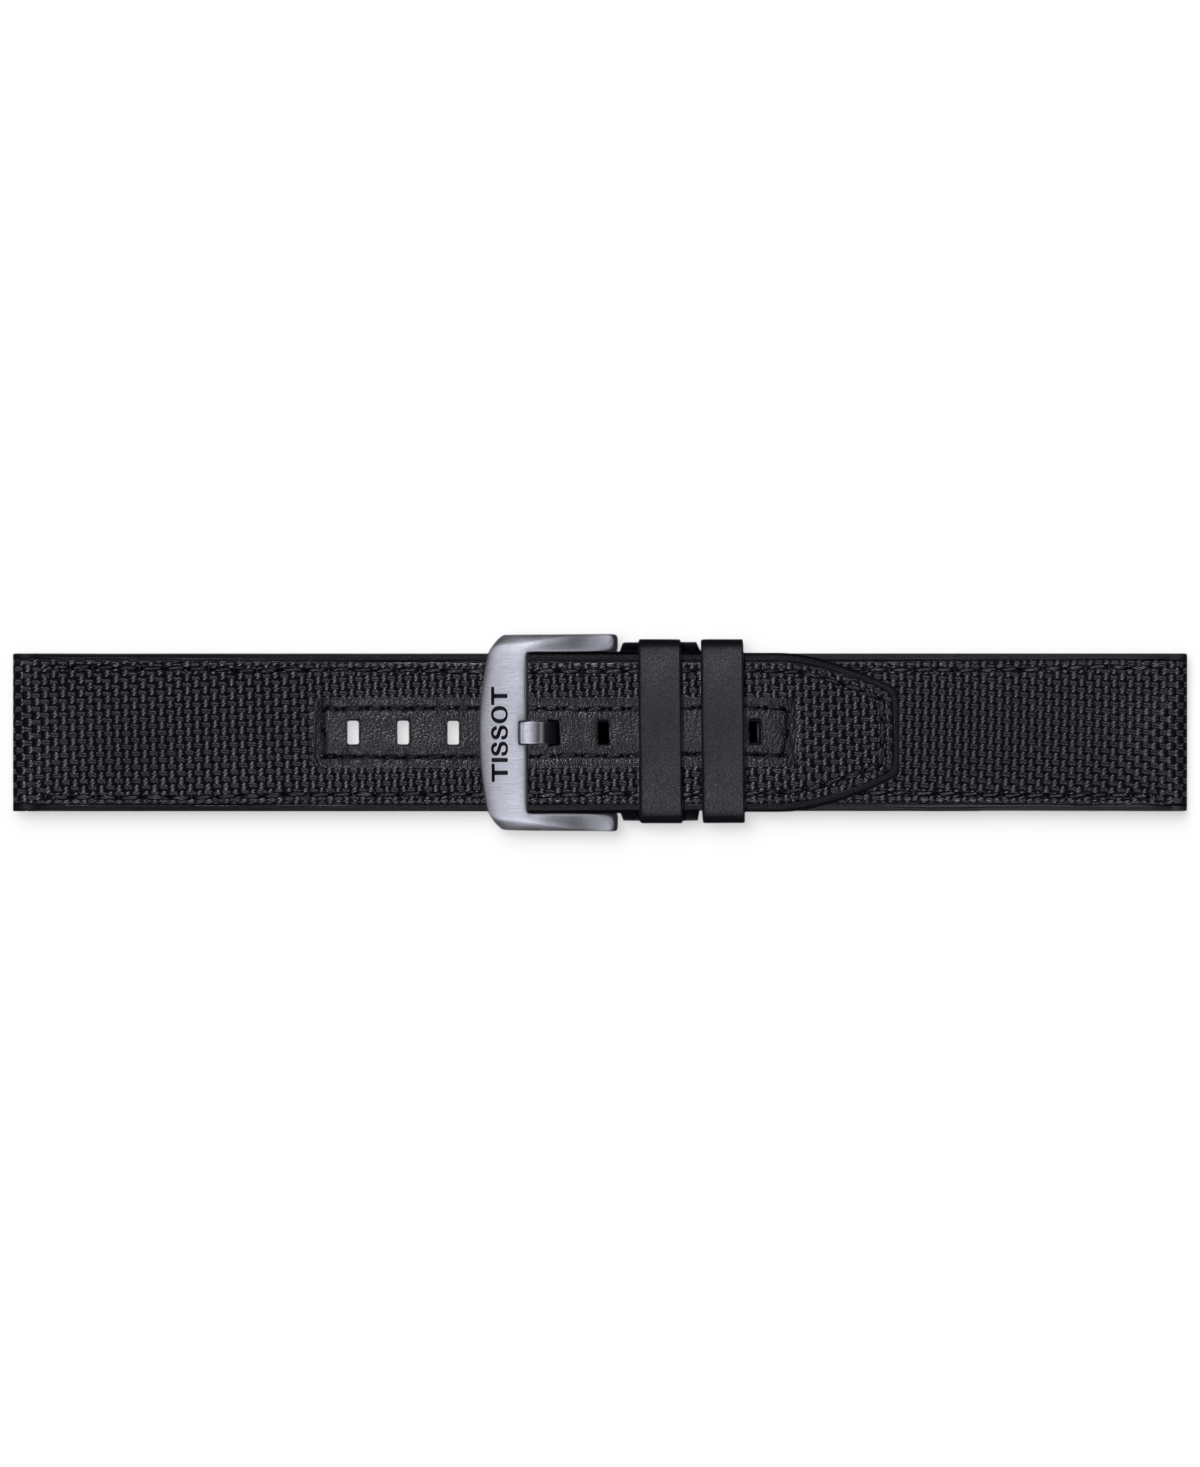 Shop Tissot Men's Swiss Chronograph Supersport Black Textile Strap Watch 40mm